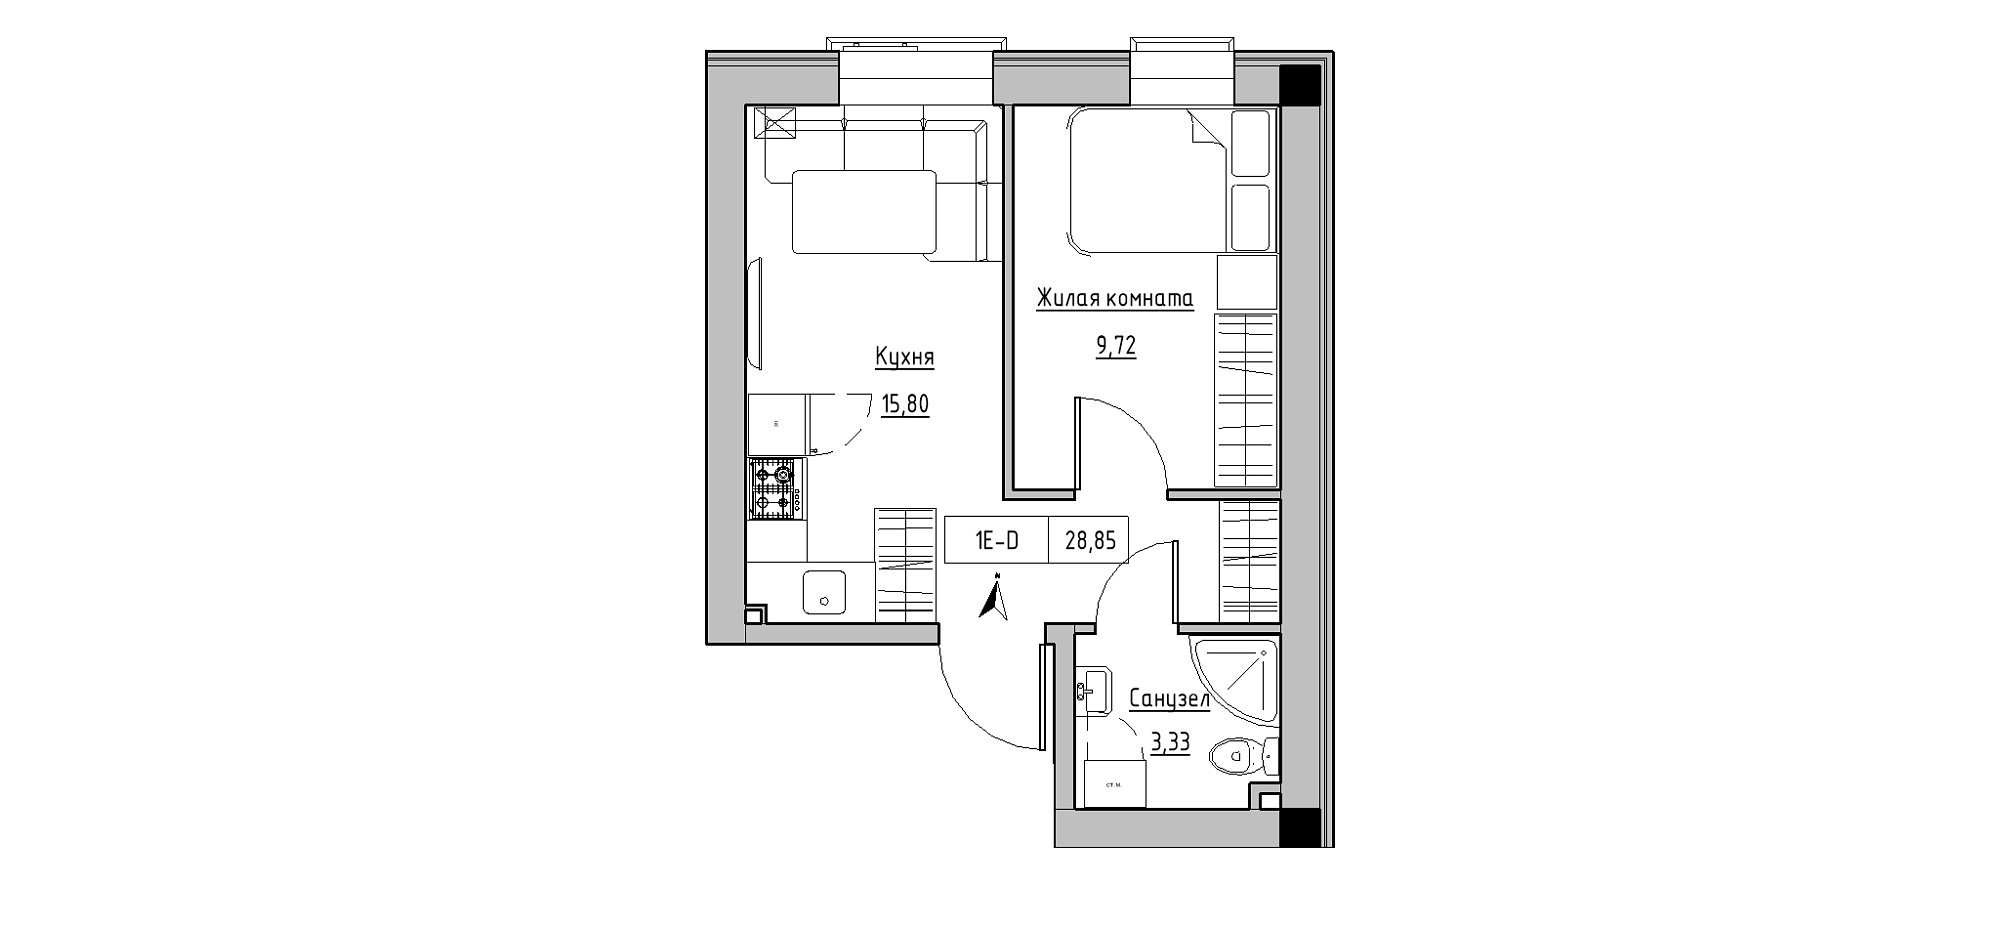 Planning 1-rm flats area 28.85m2, KS-020-02/0002.